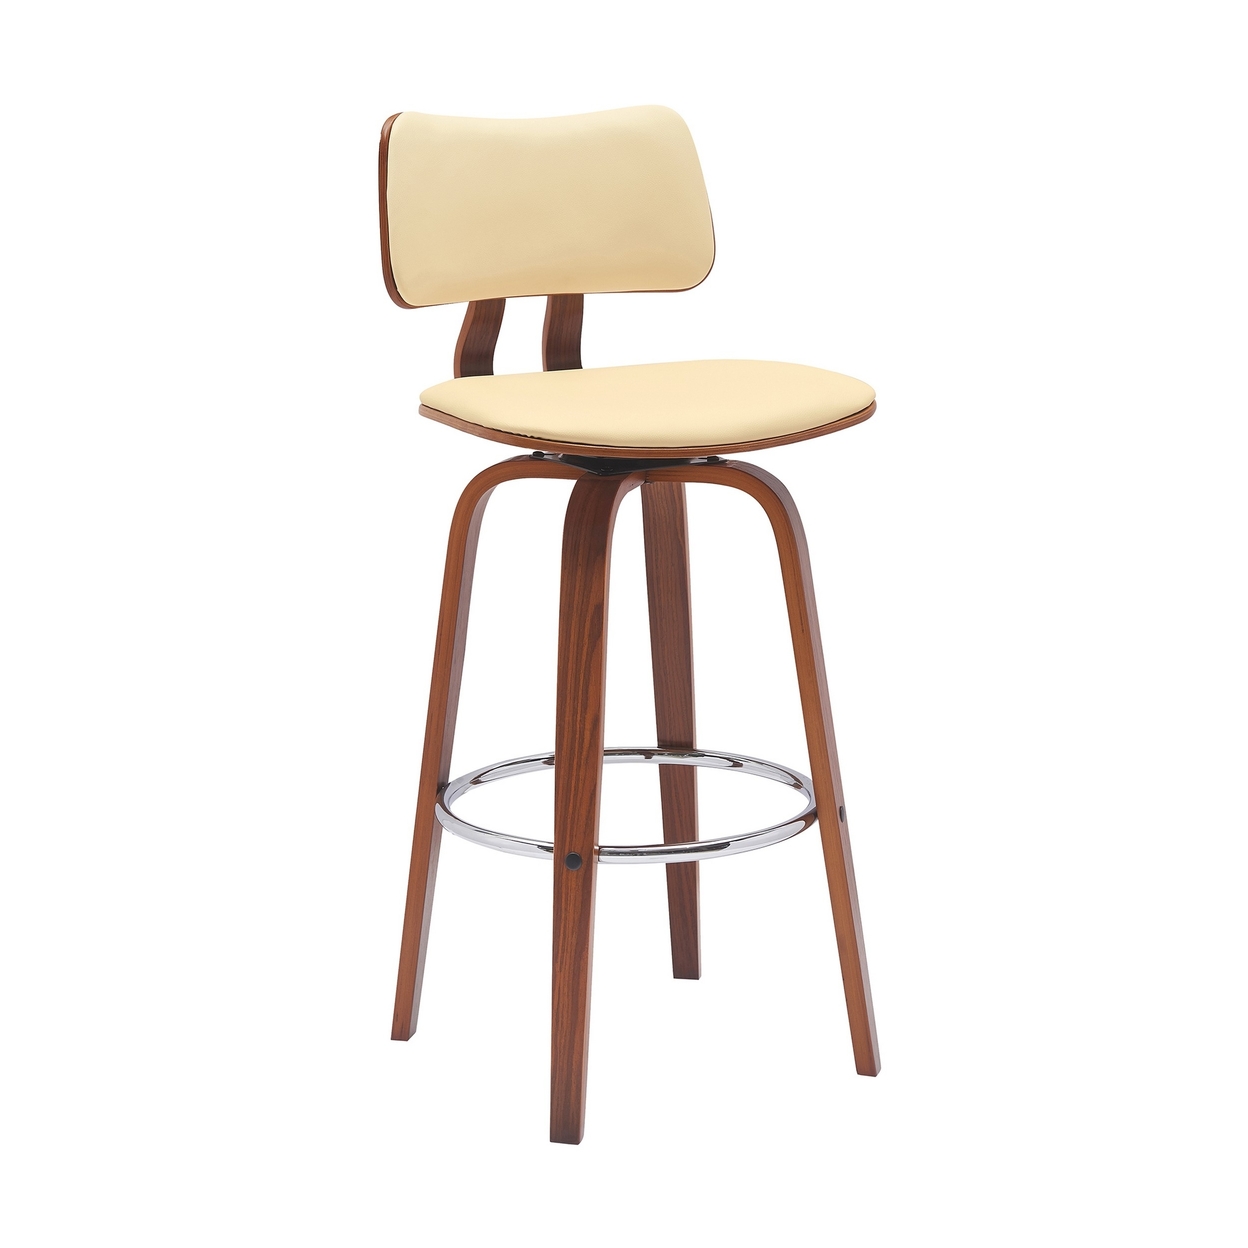 Pino 30 Inch Swivel Barstool Chair, Cream Faux Leather, Walnut Brown Wood - Saltoro Sherpi